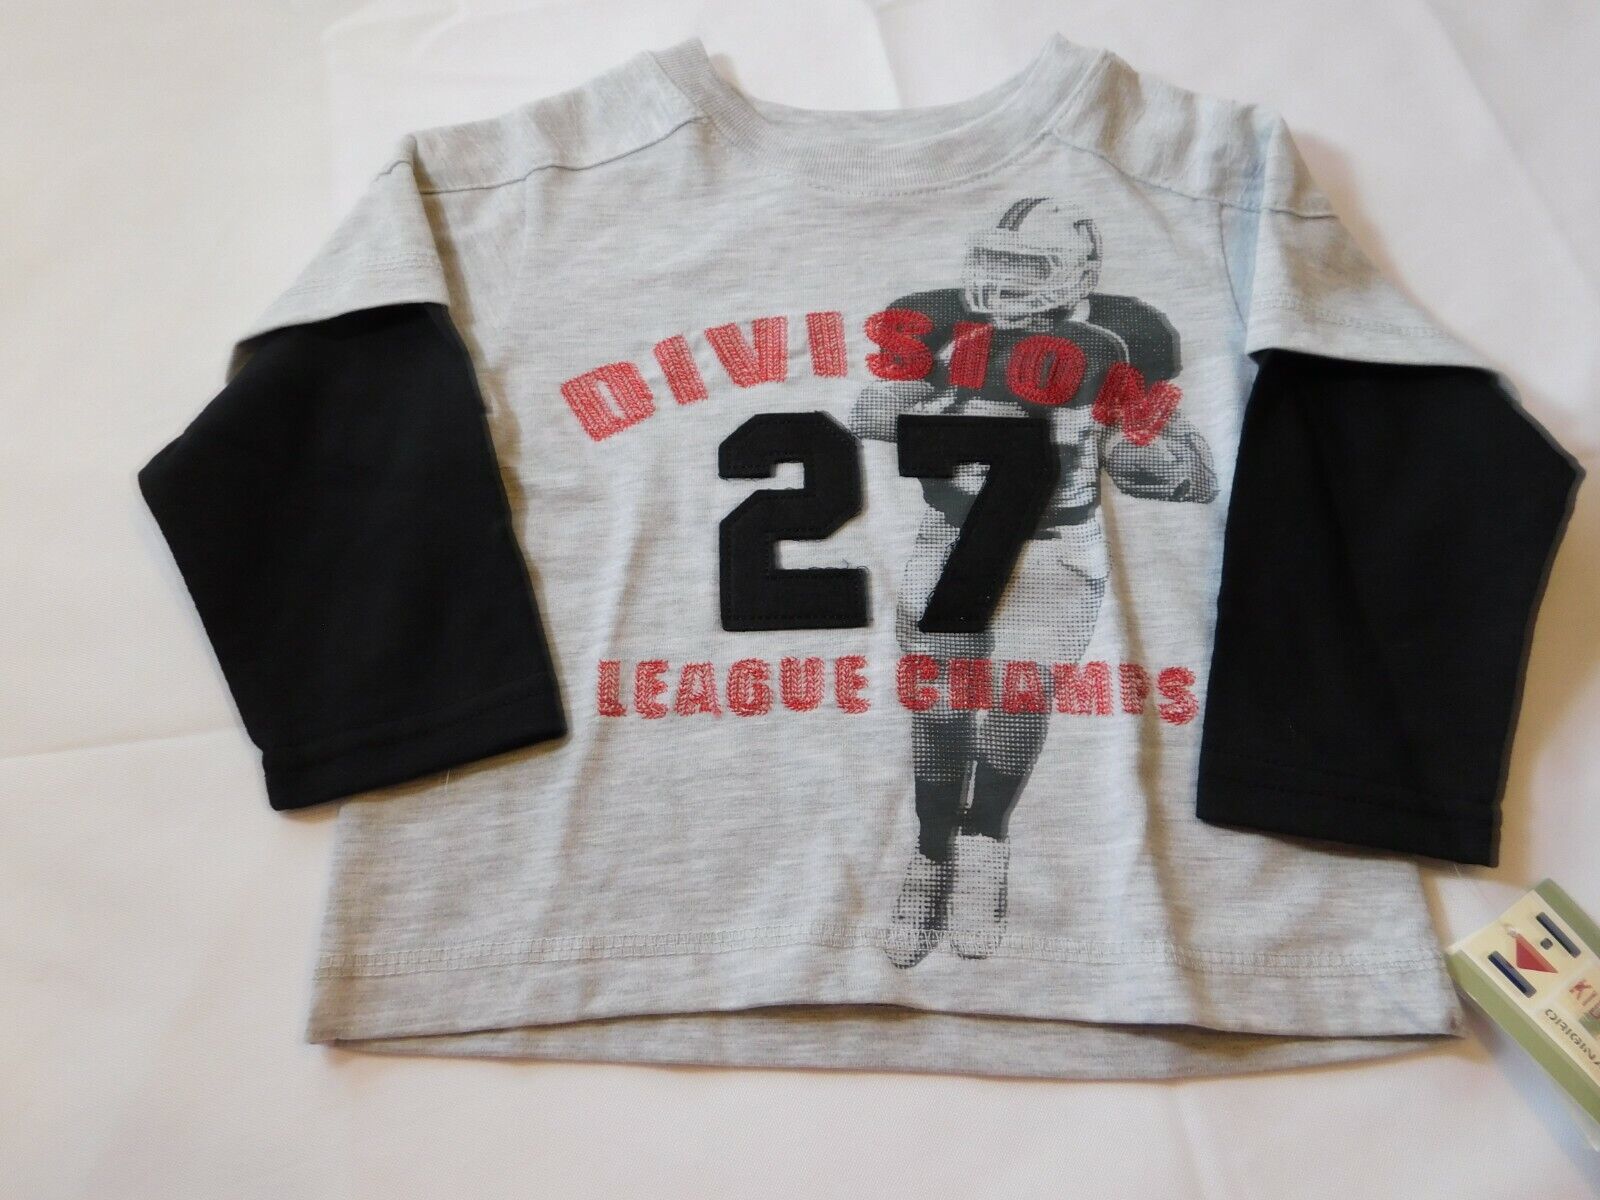 Kids Headquarters Baby Boy's football LS T Shirt Size 18 Months Grey Heather NWT - $12.86